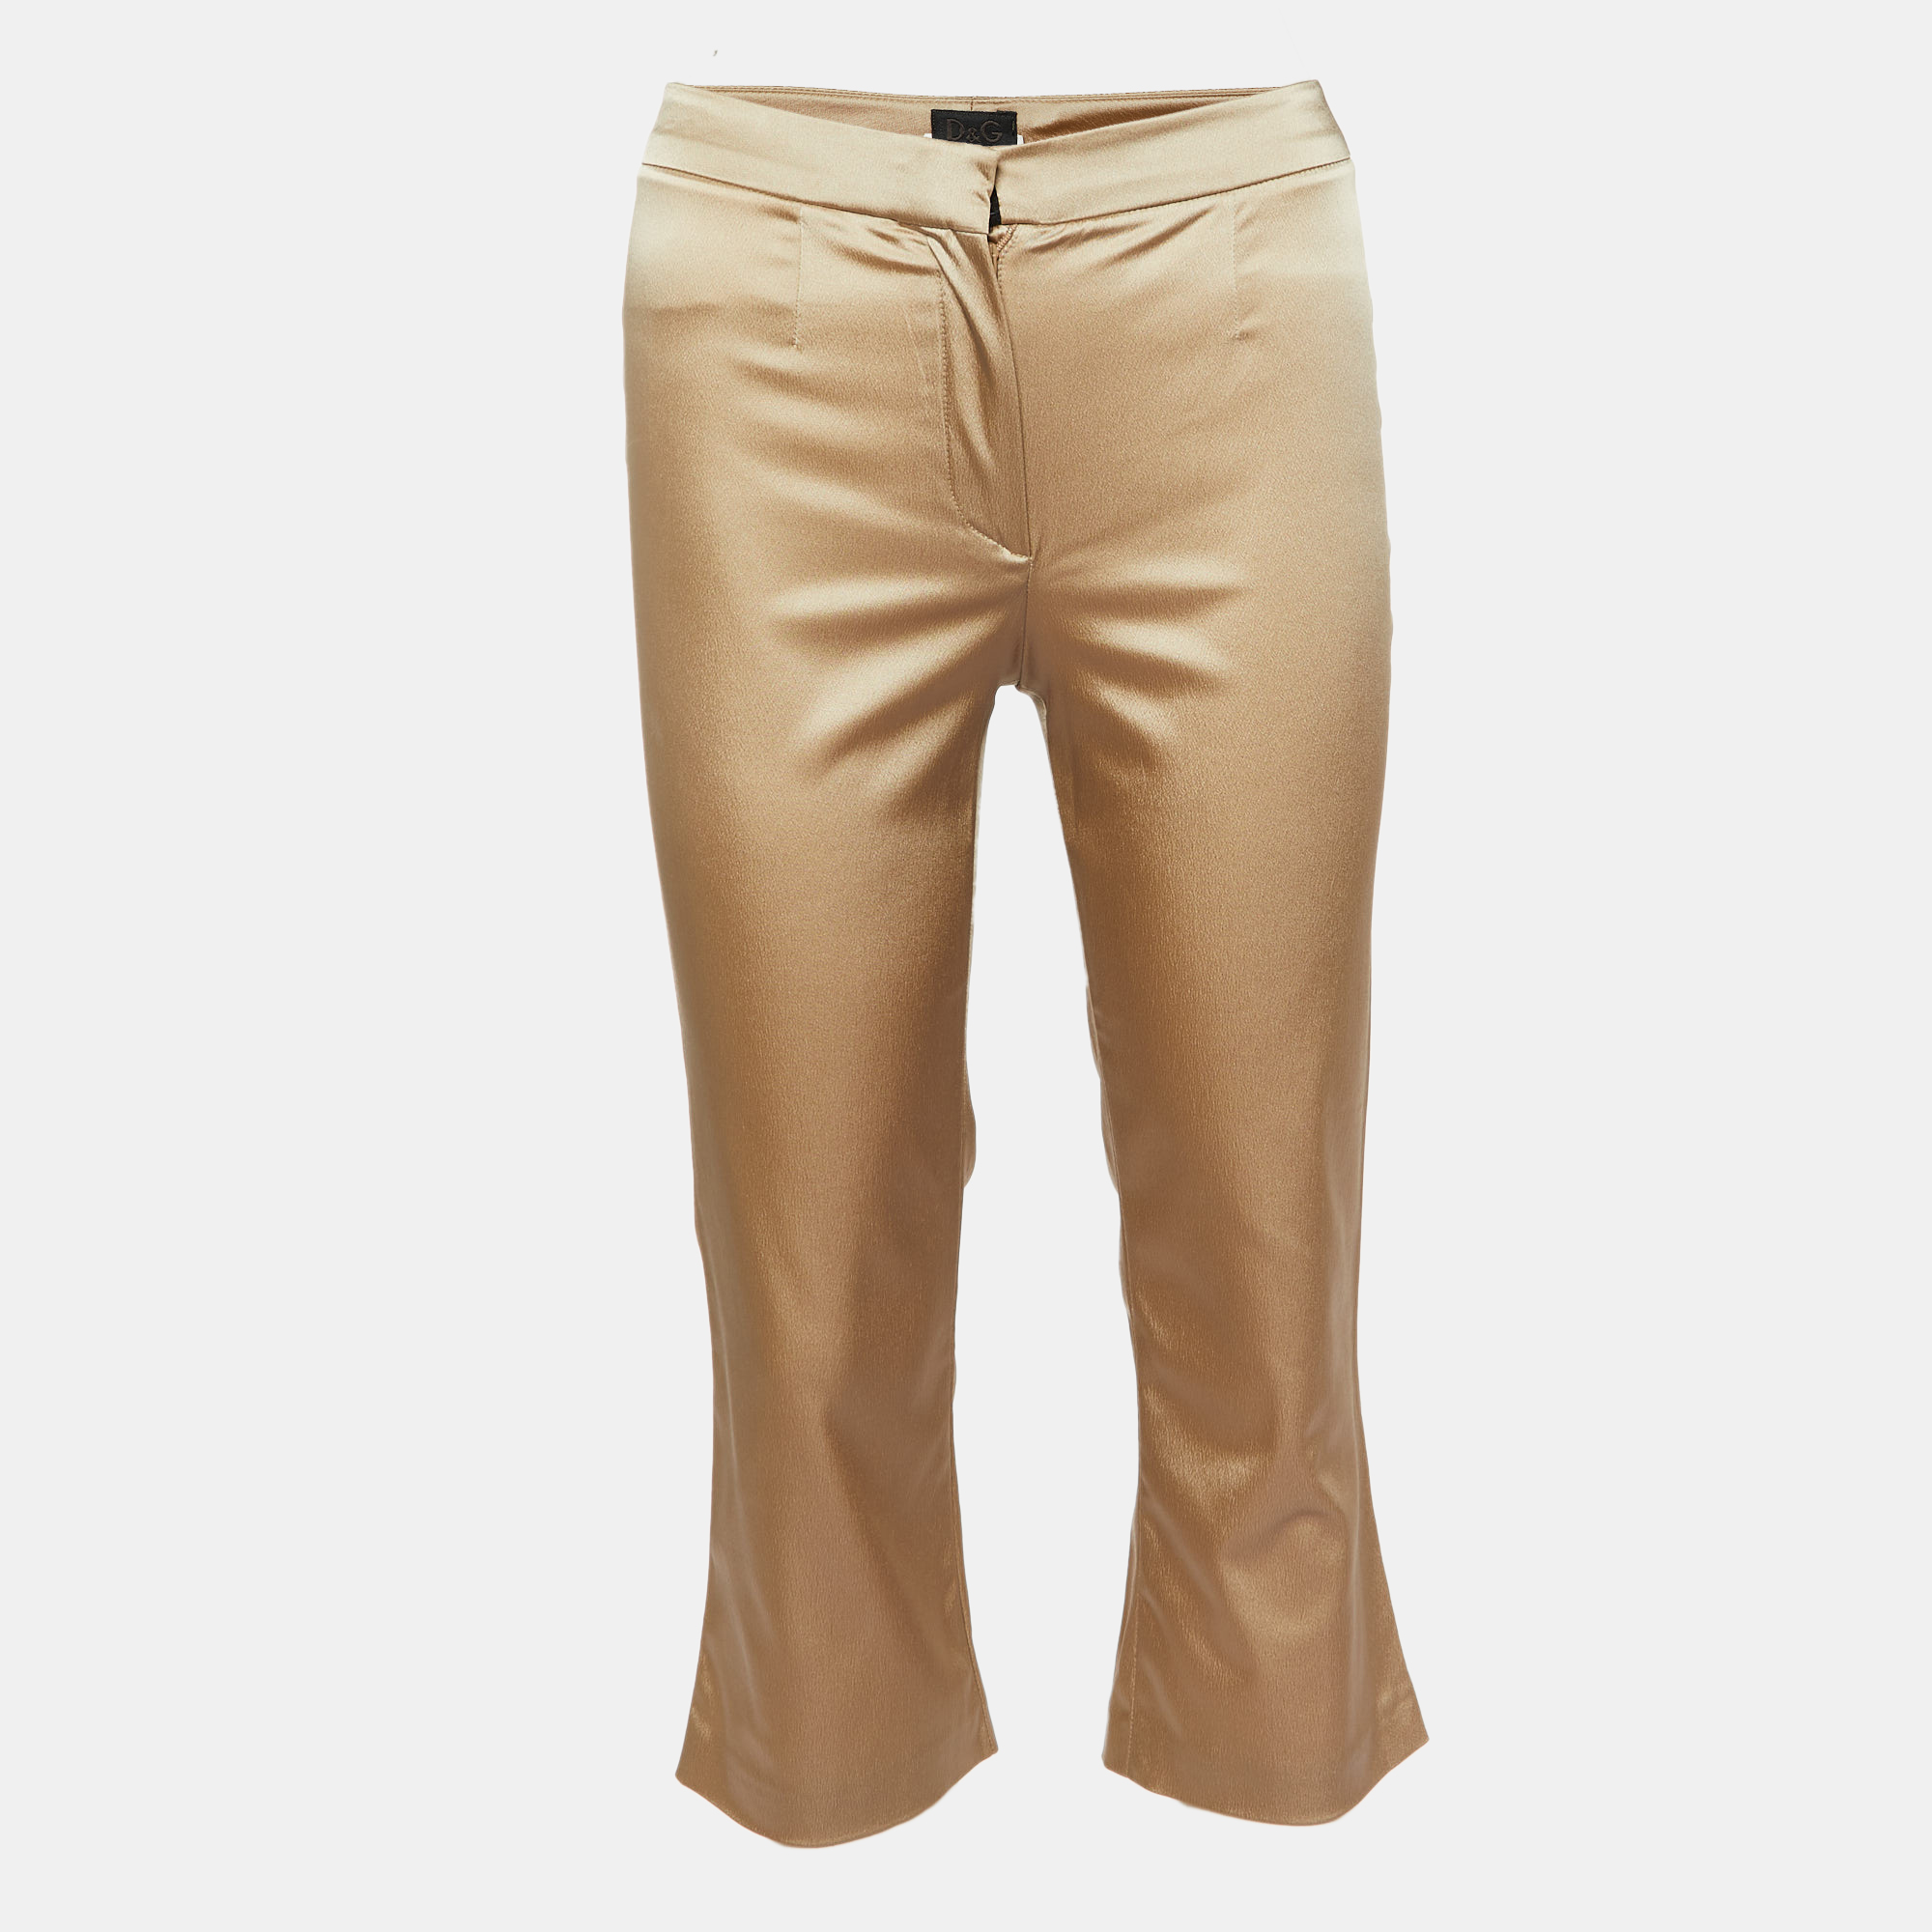 D&G Gold Stretch Crepe Capri Pants S